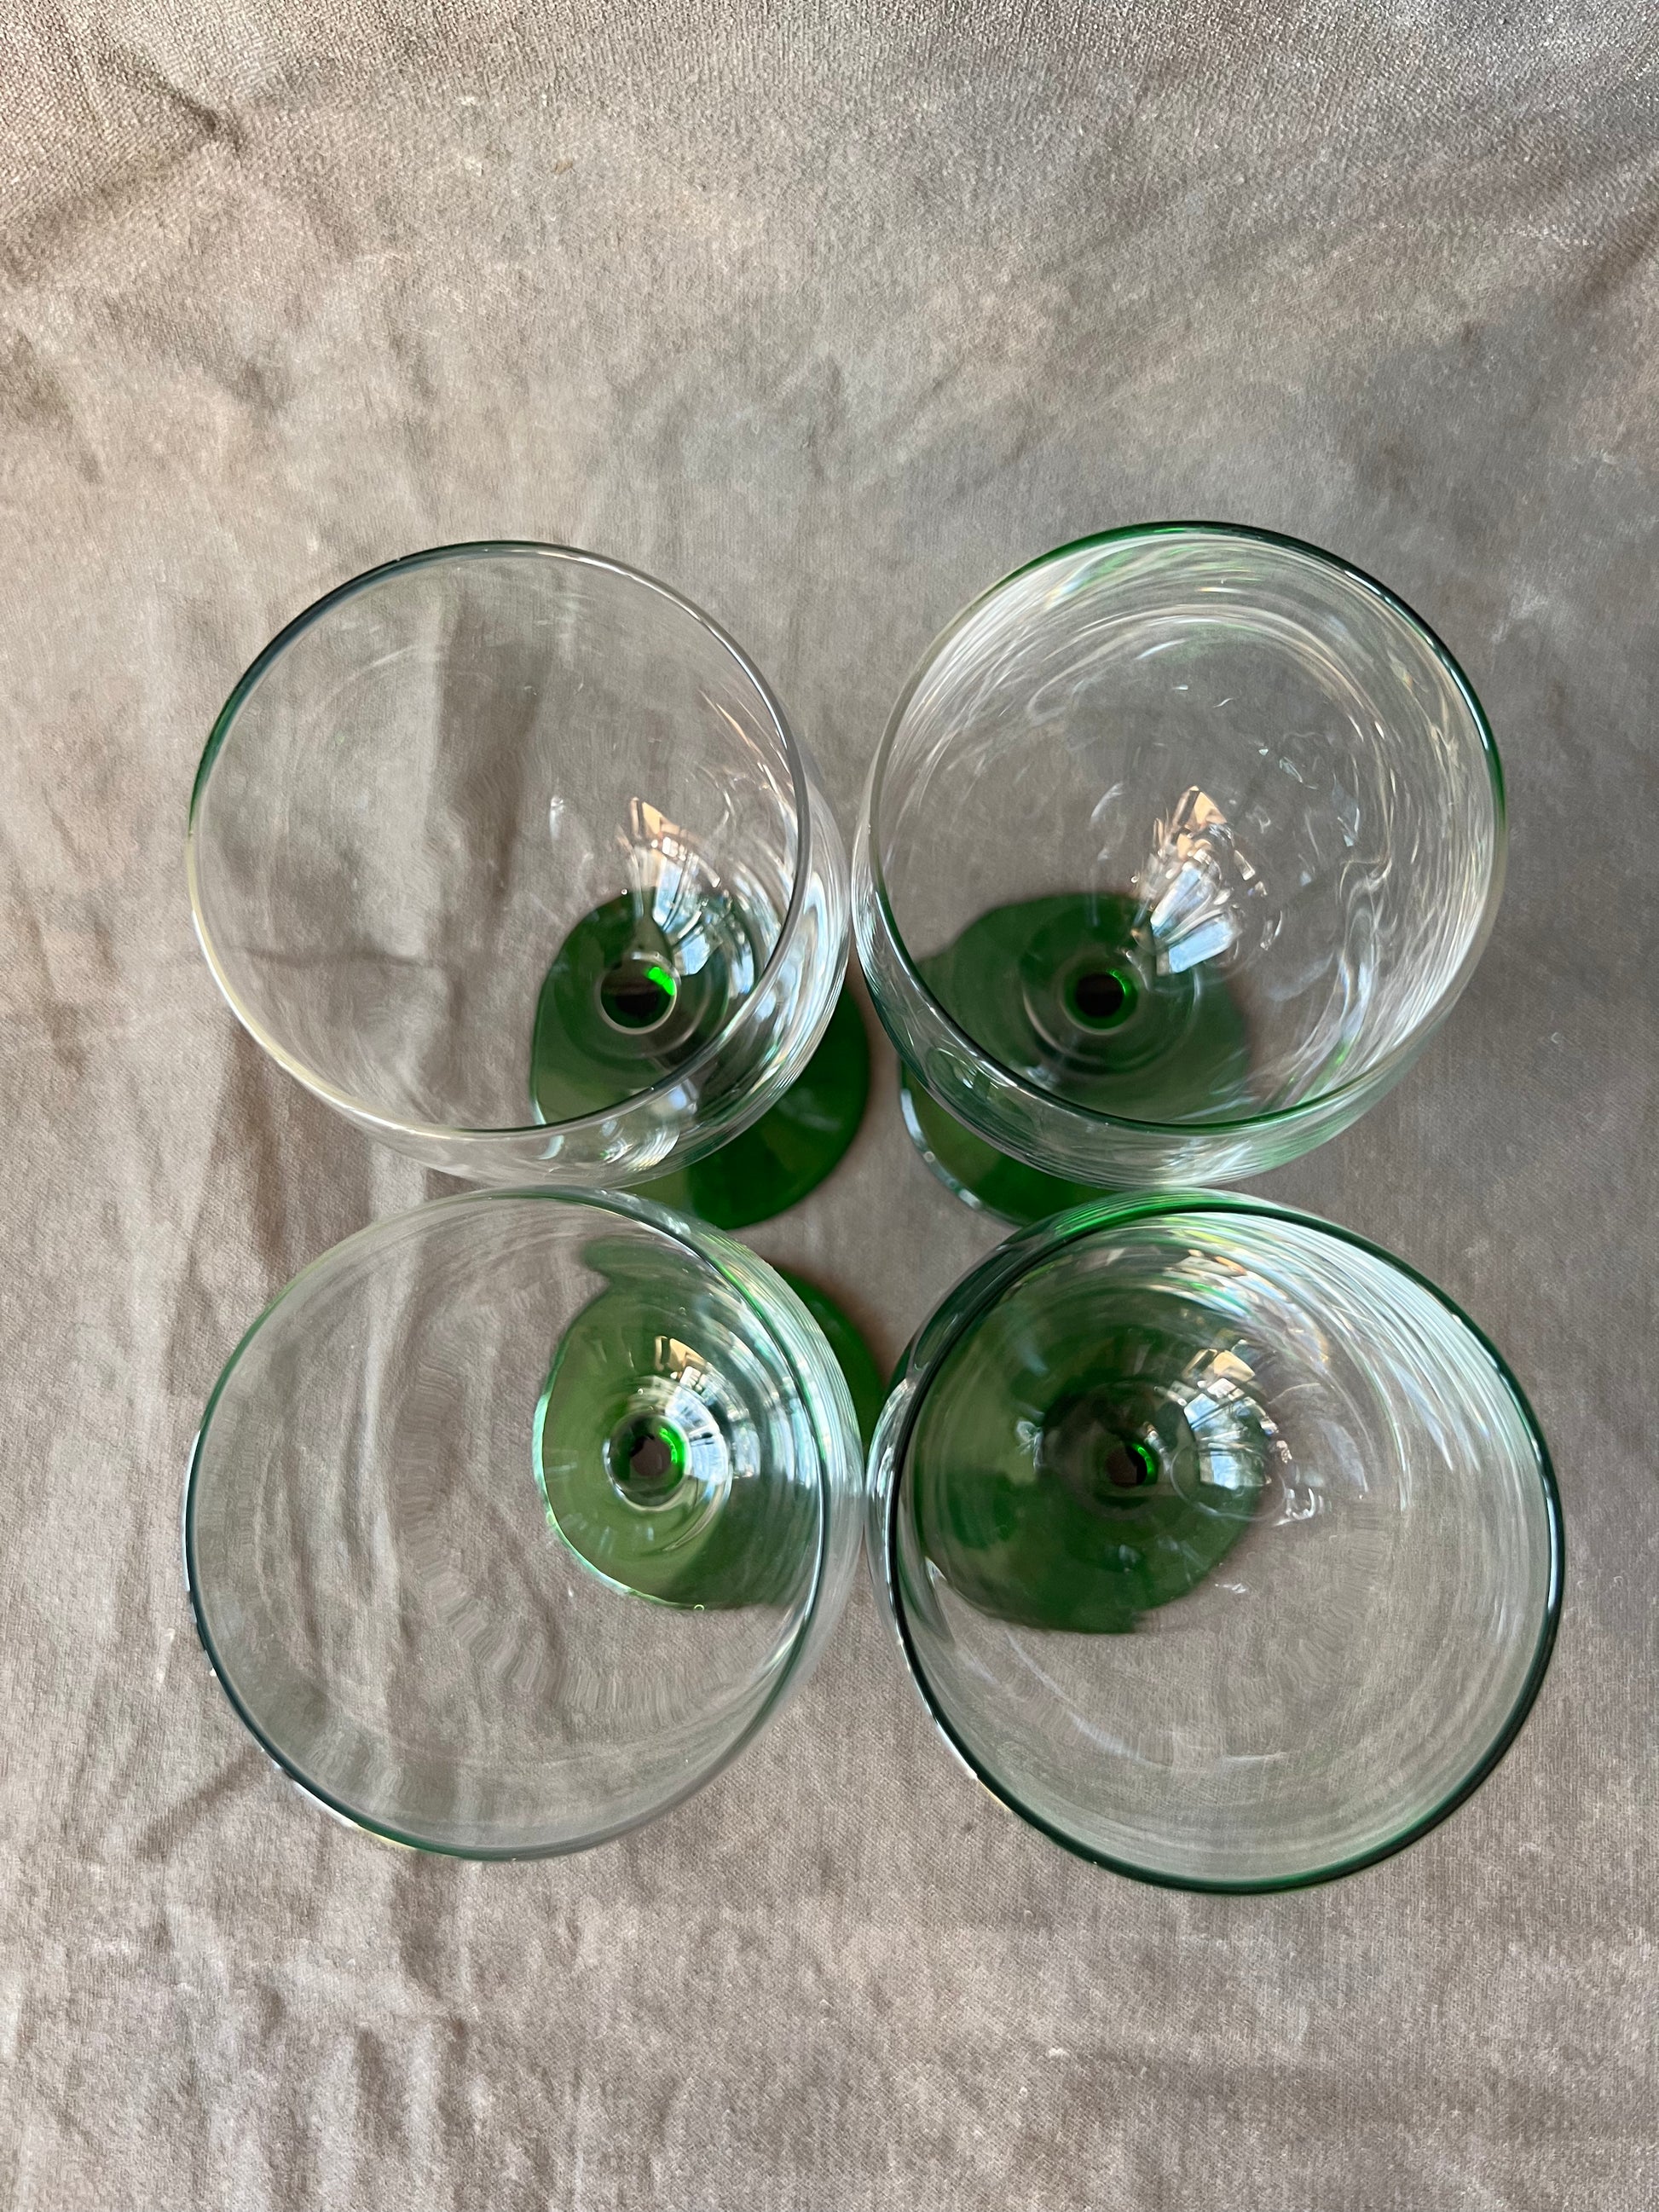 Vintage French 'Luminarc' Green Stem Wine Glasses in Original Box- Set of 6